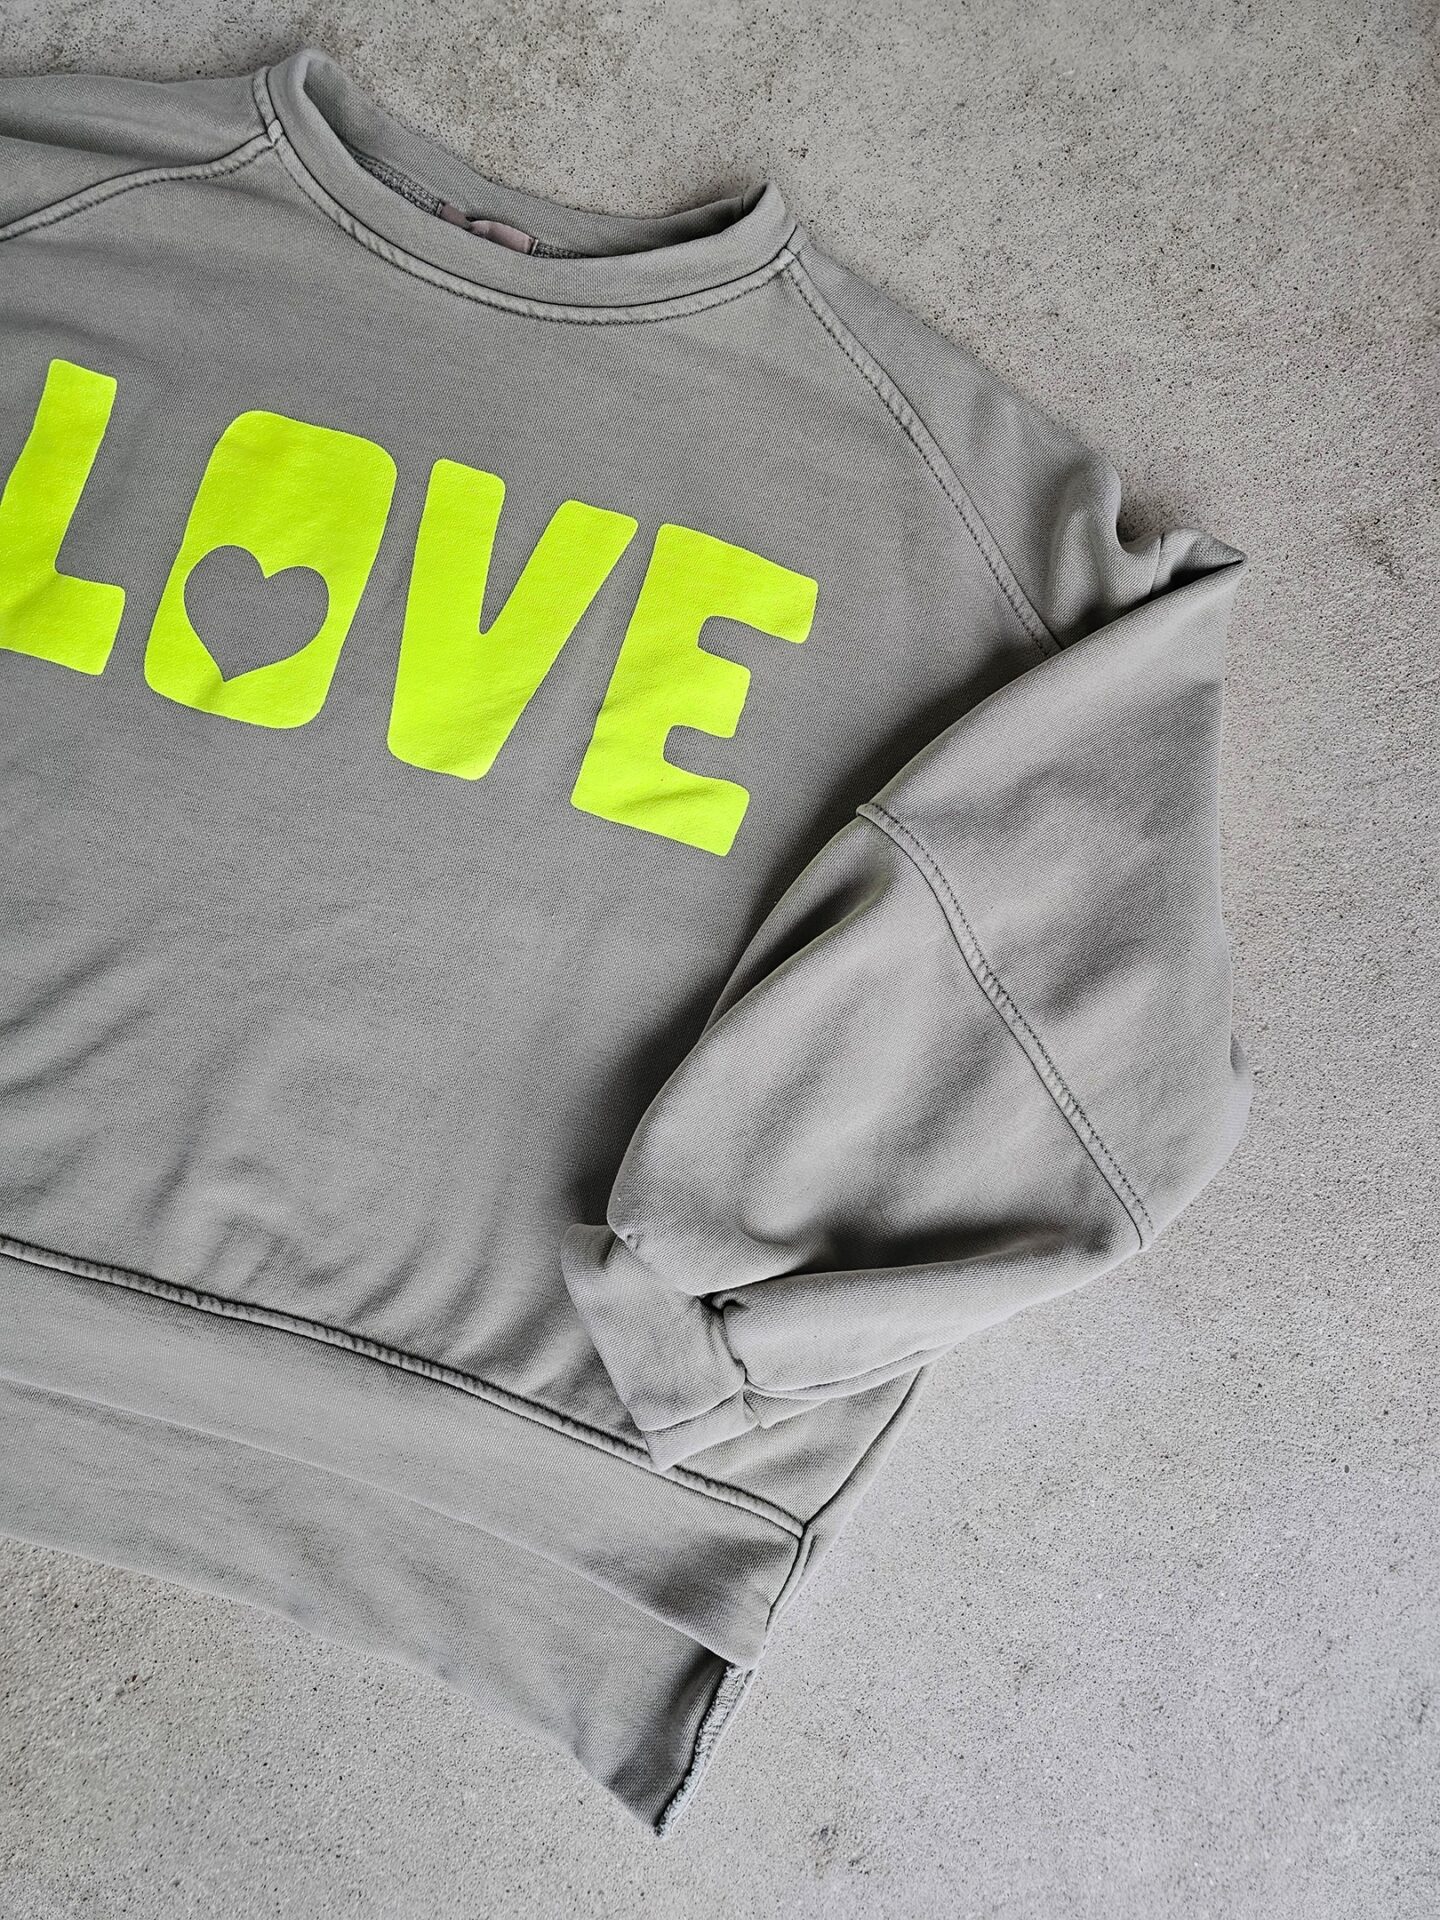 Sweater NEON LOVE